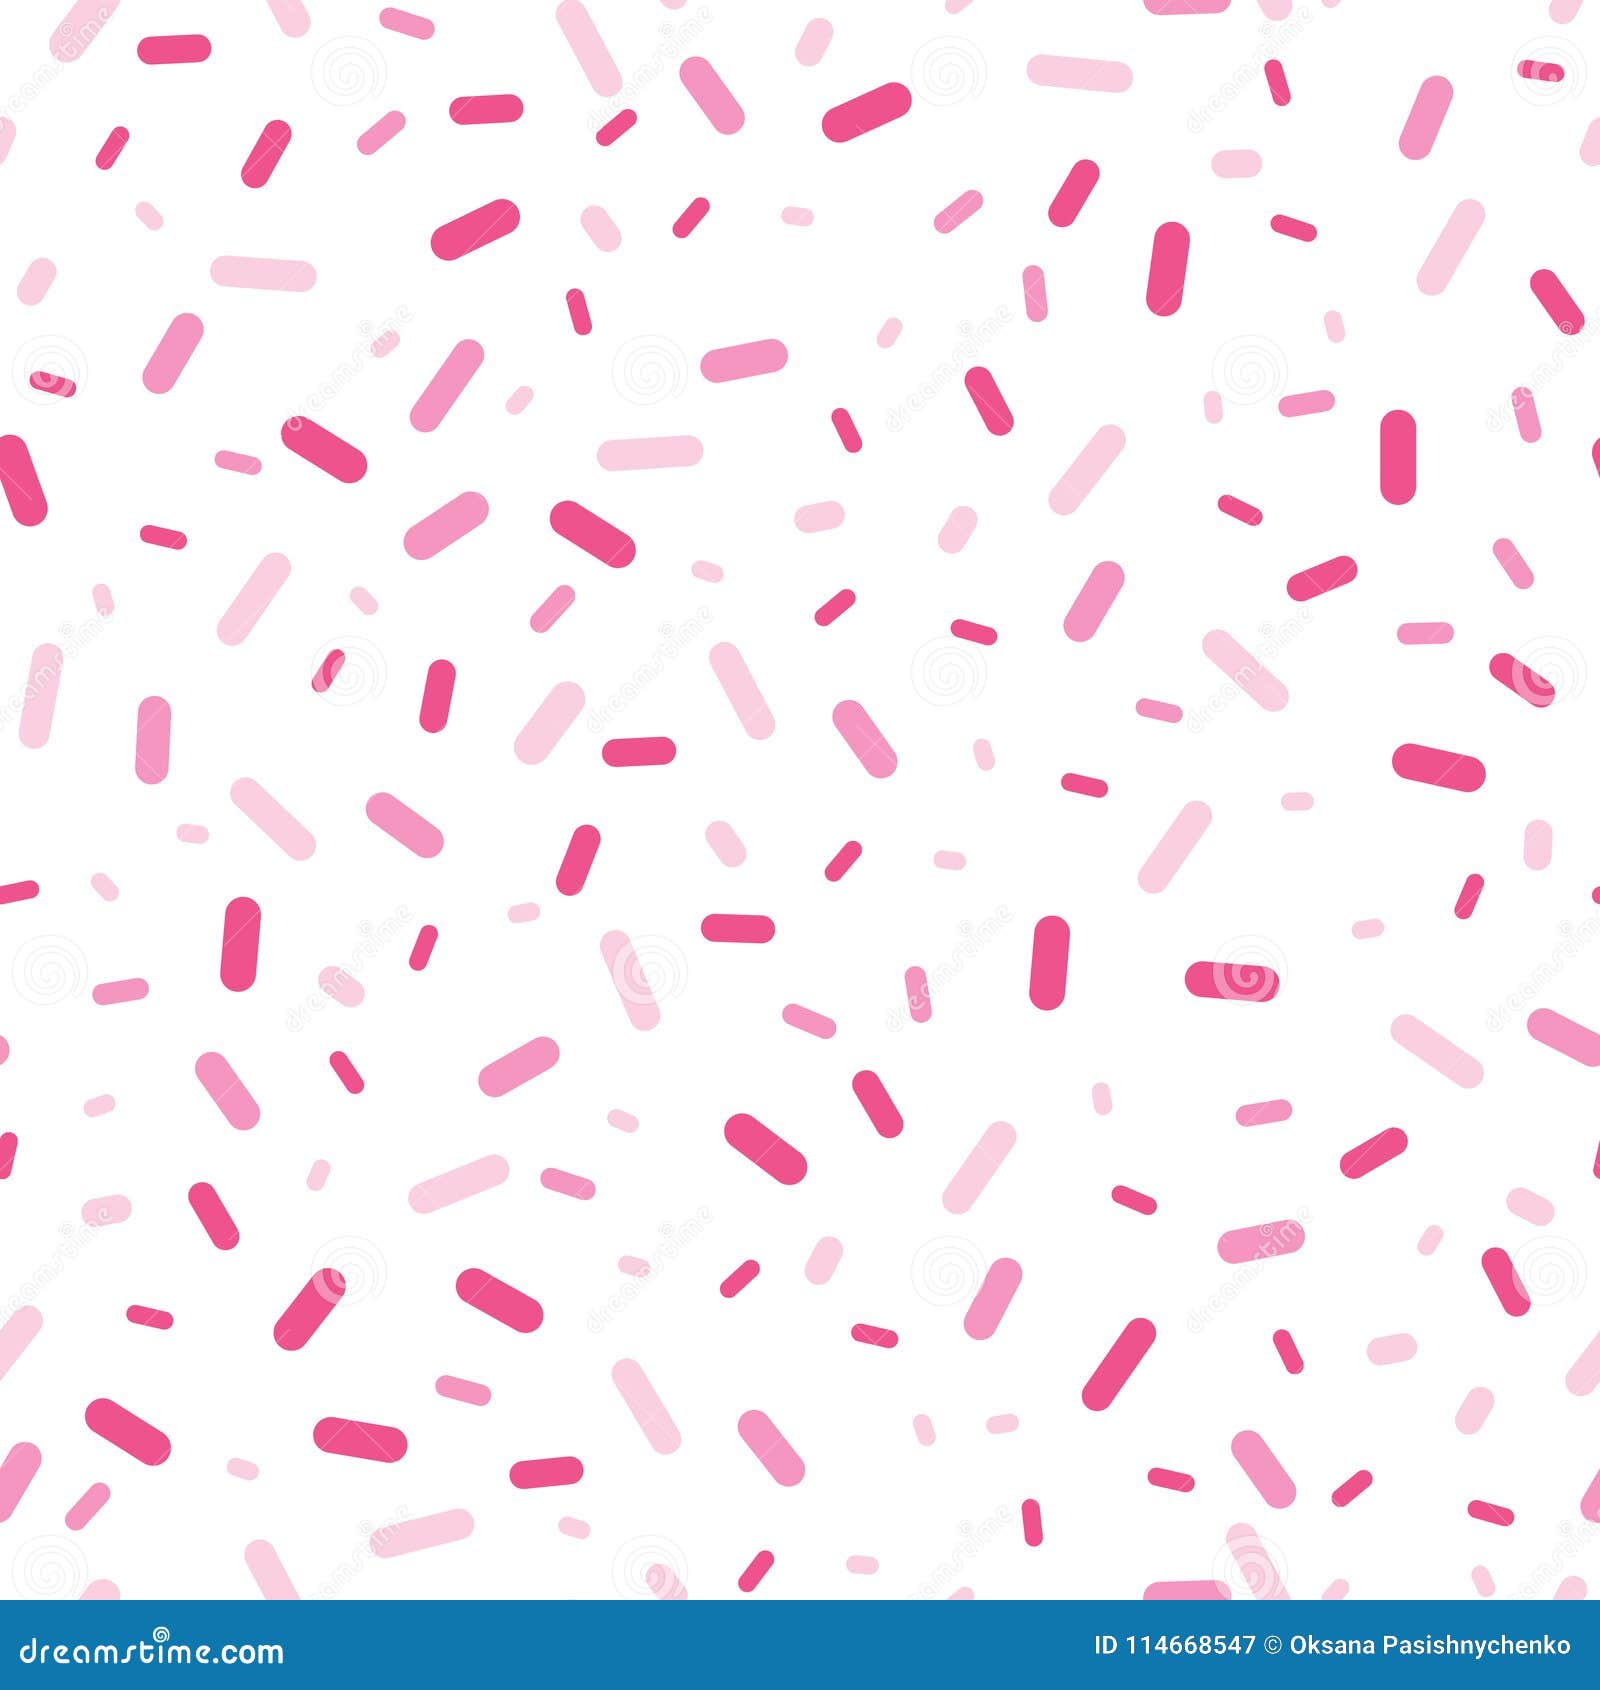 pink confetti sprinkles seamless pattern.